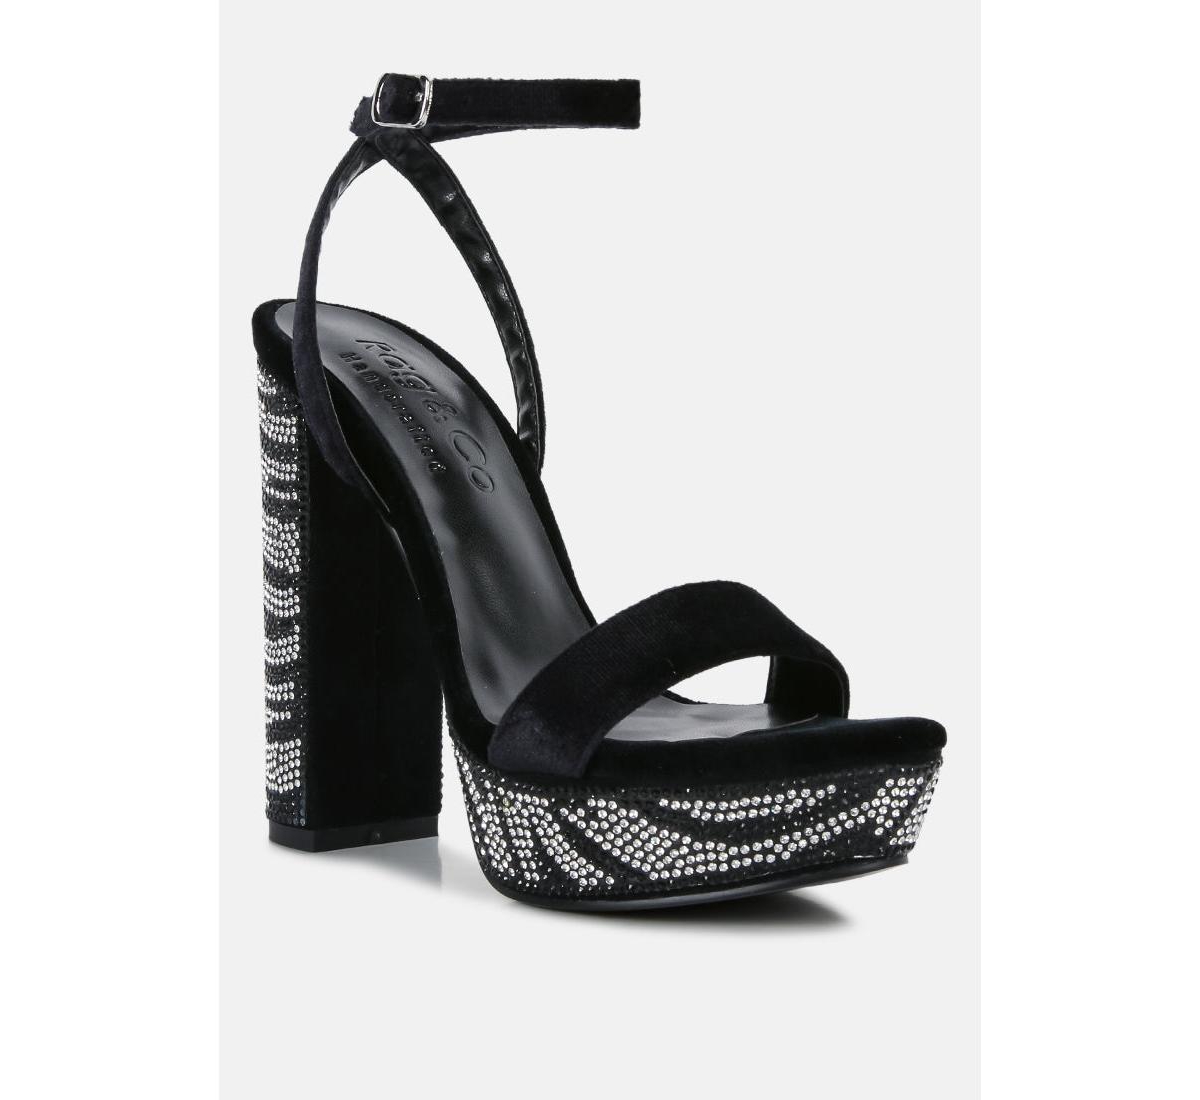 Zircon Womens Rhinestone Patterned High Heel Sandals - Black